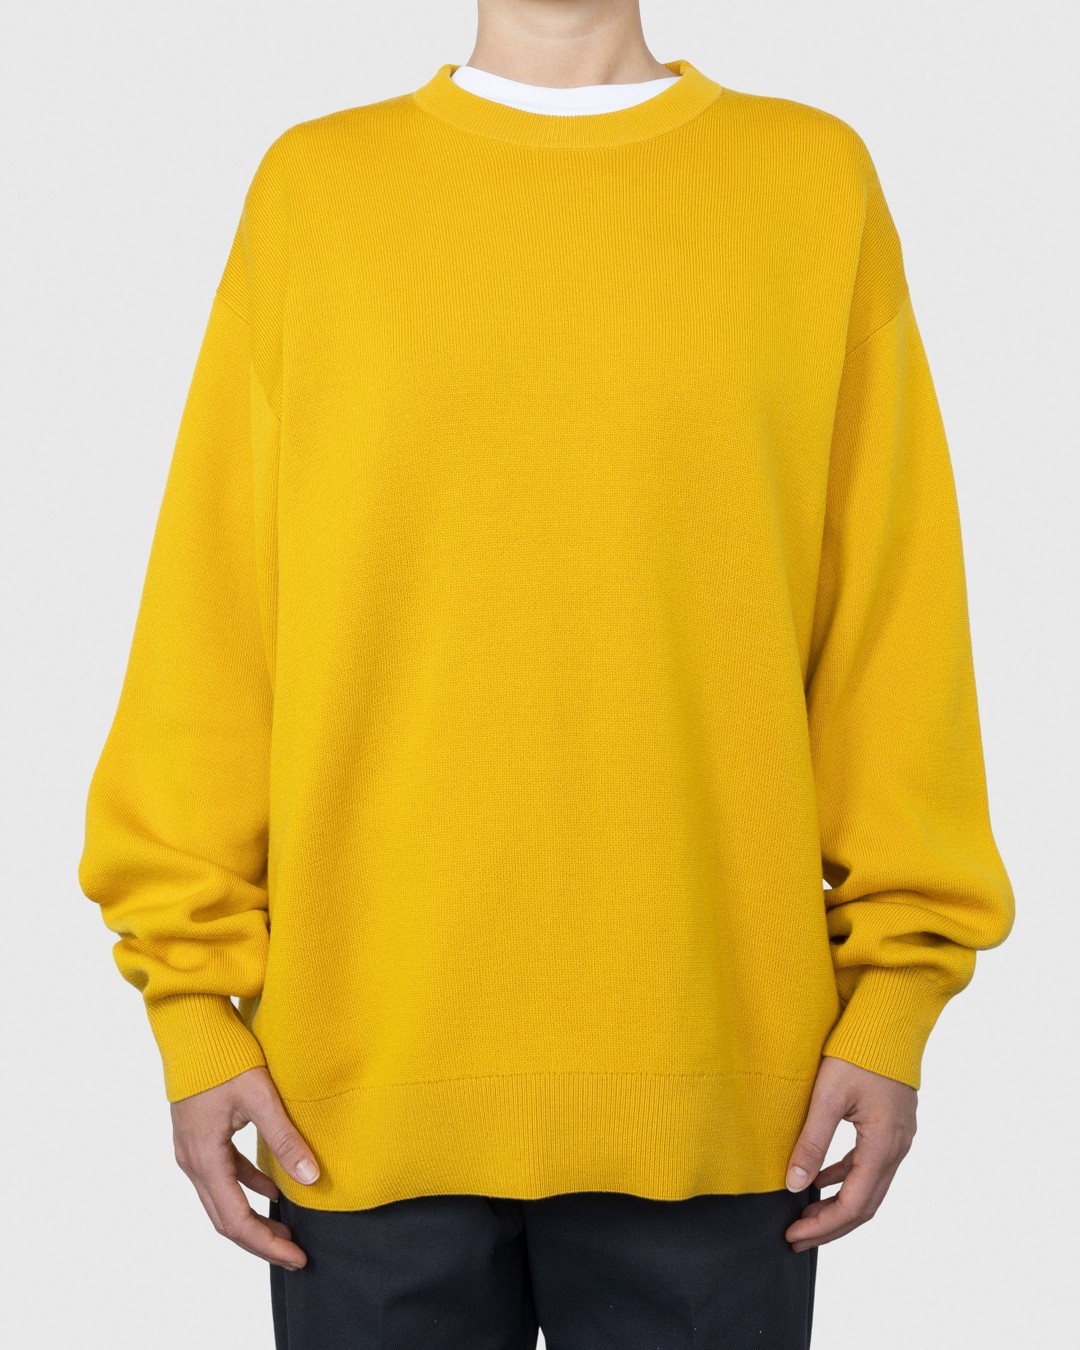 Acne Studios – Merino Wool Crewneck Sweater Yellow - Knitwear - Yellow - Image 2